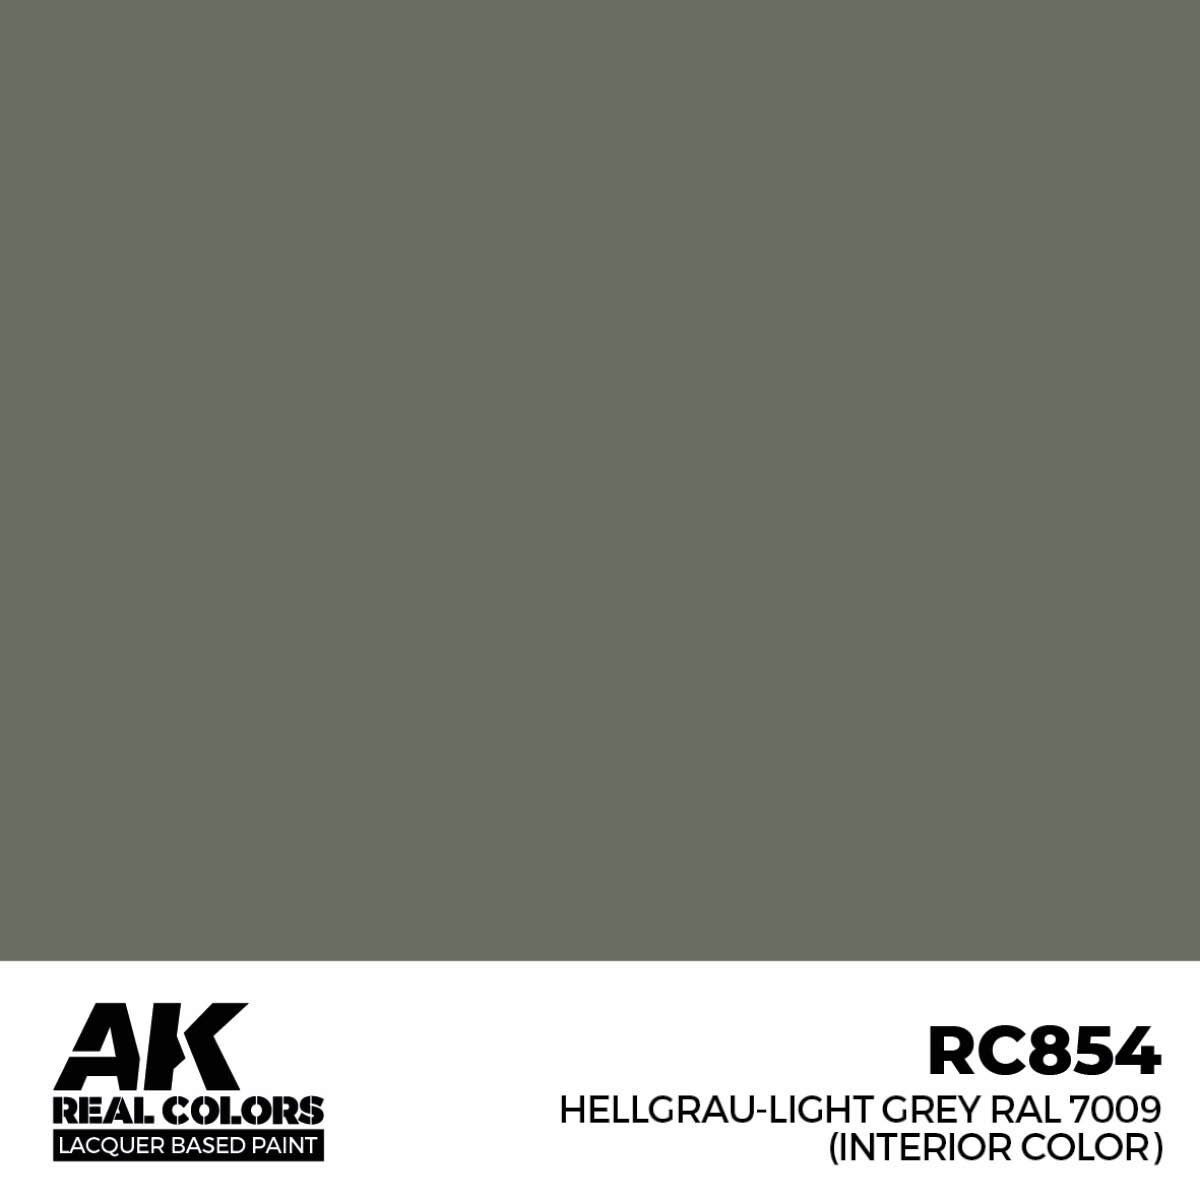 AK RC854 Real Colors Hellgrau-Light Grey RAL 7009 (interior color) 17 m